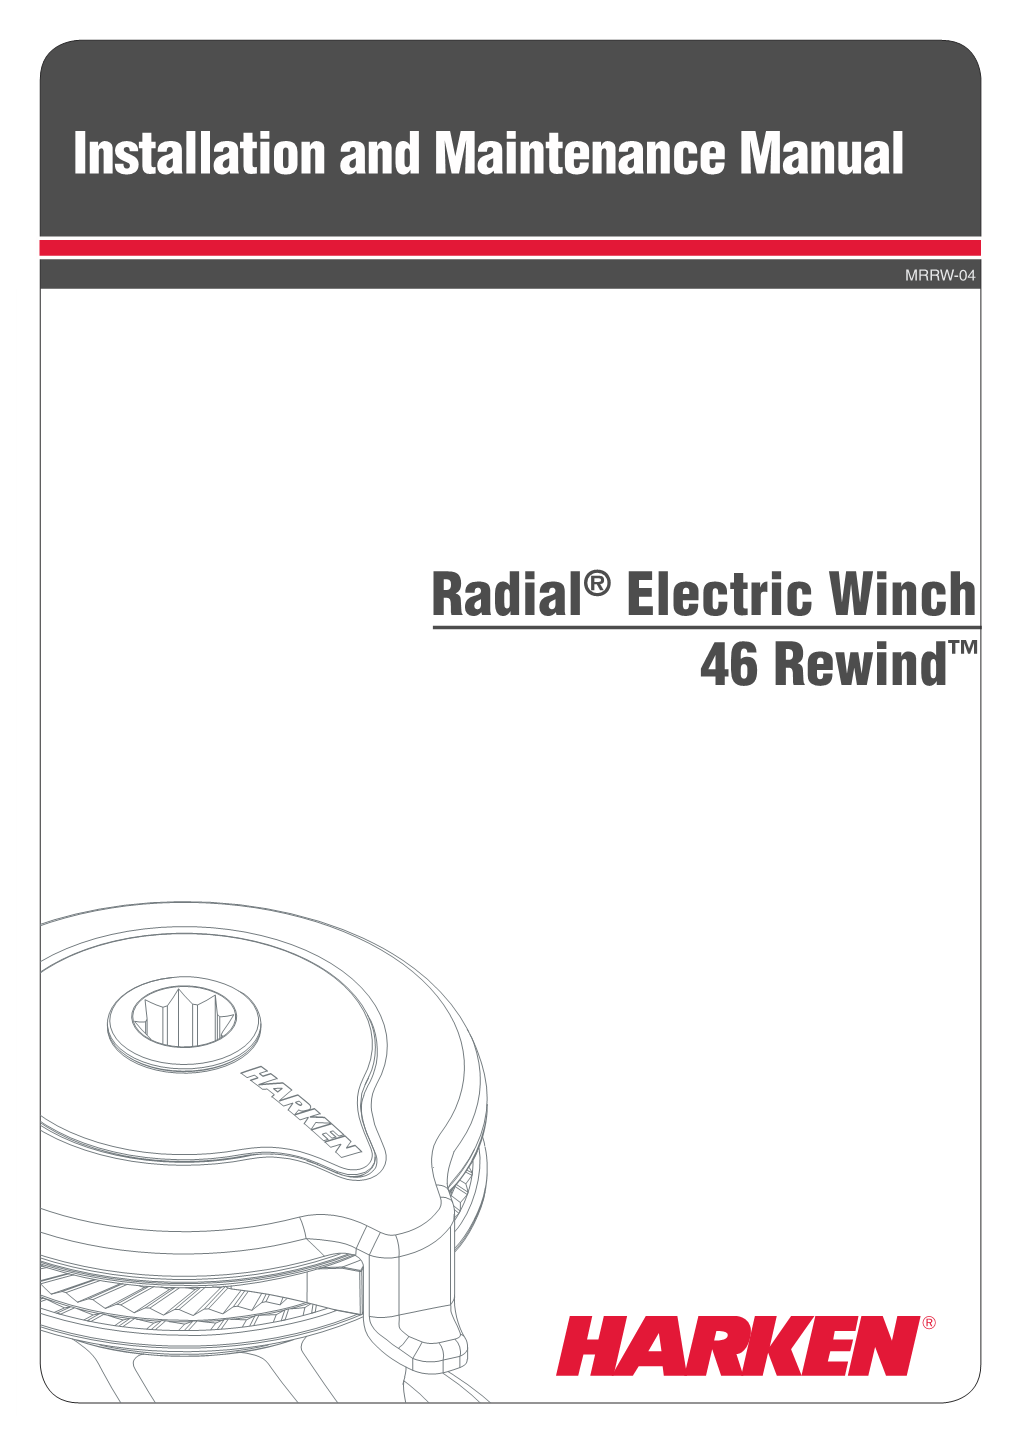 Installation and Maintenance Manual Winch 46 Rewind